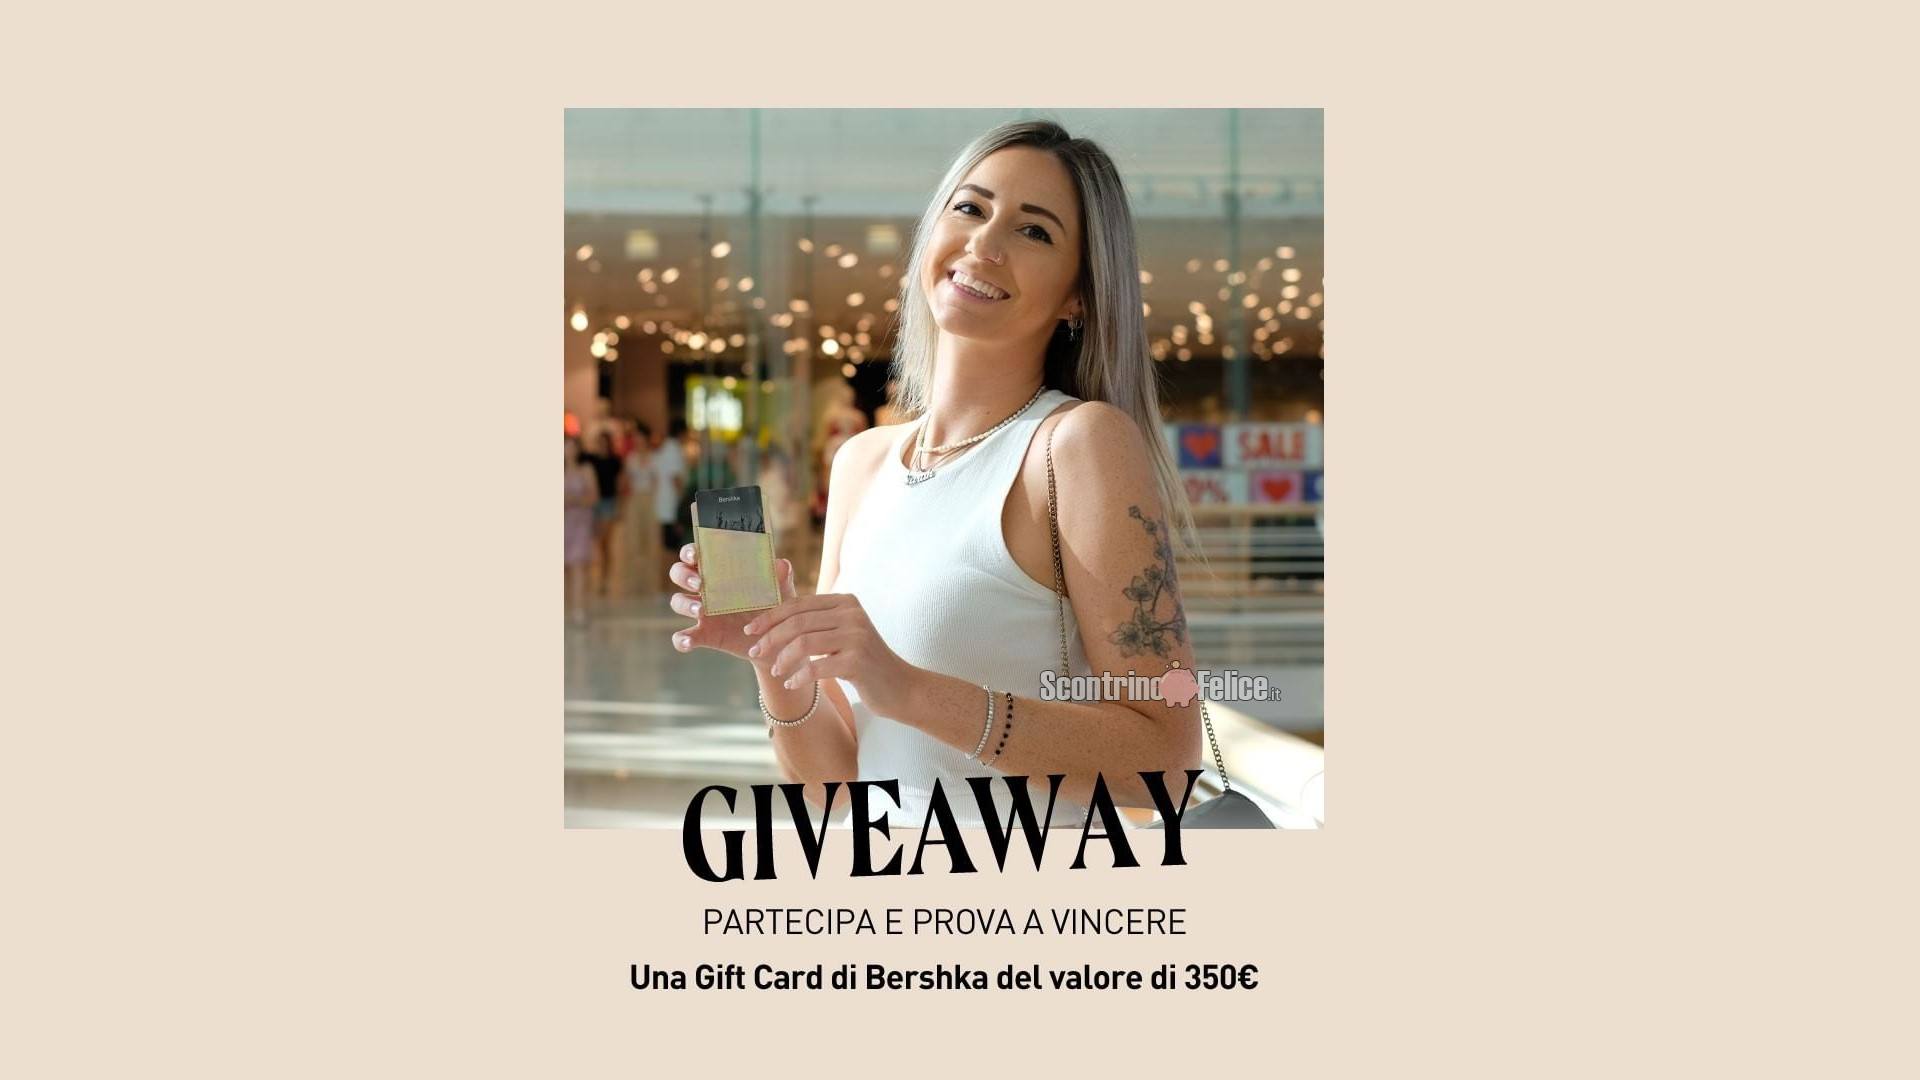 Giveaway Nave De Vero: vinci GRATIS una Gift Card di Bershka da 350 euro